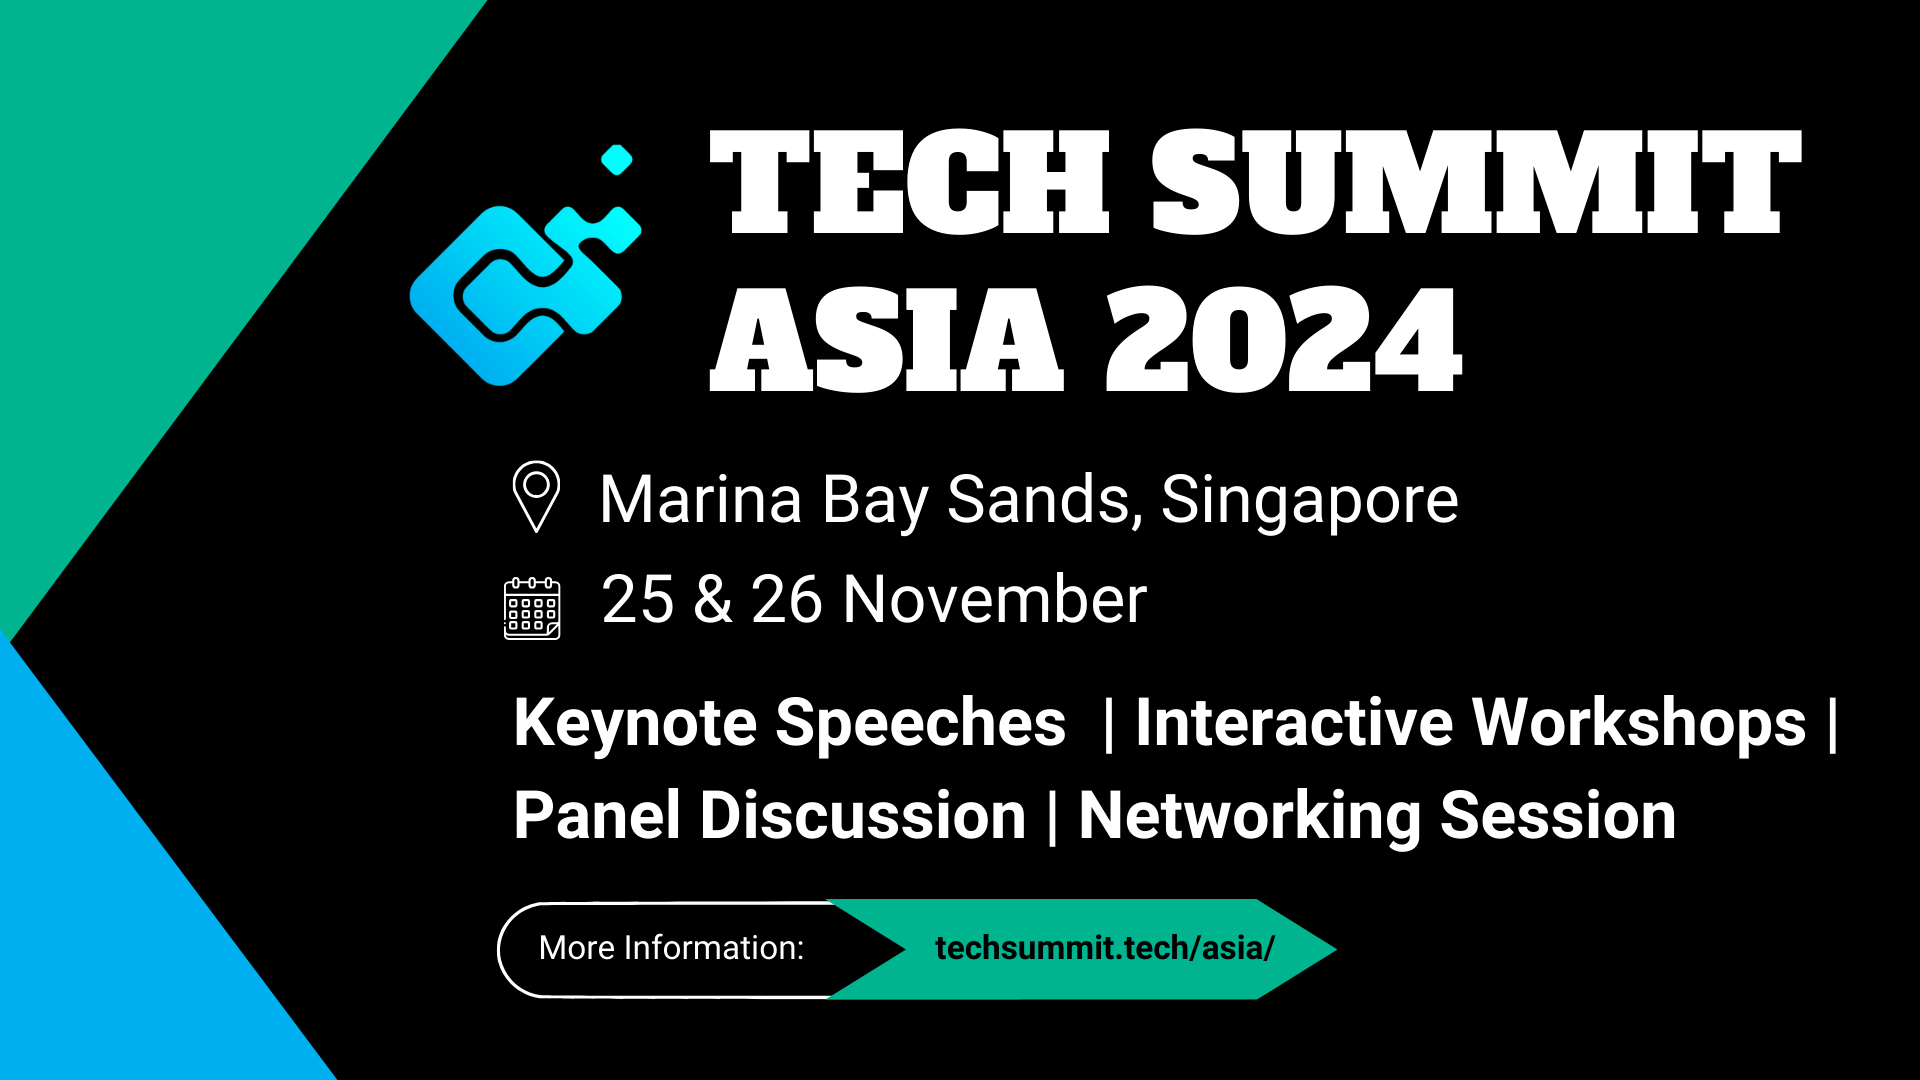 Tech Summit Asia 2024 organized by Tech Summit